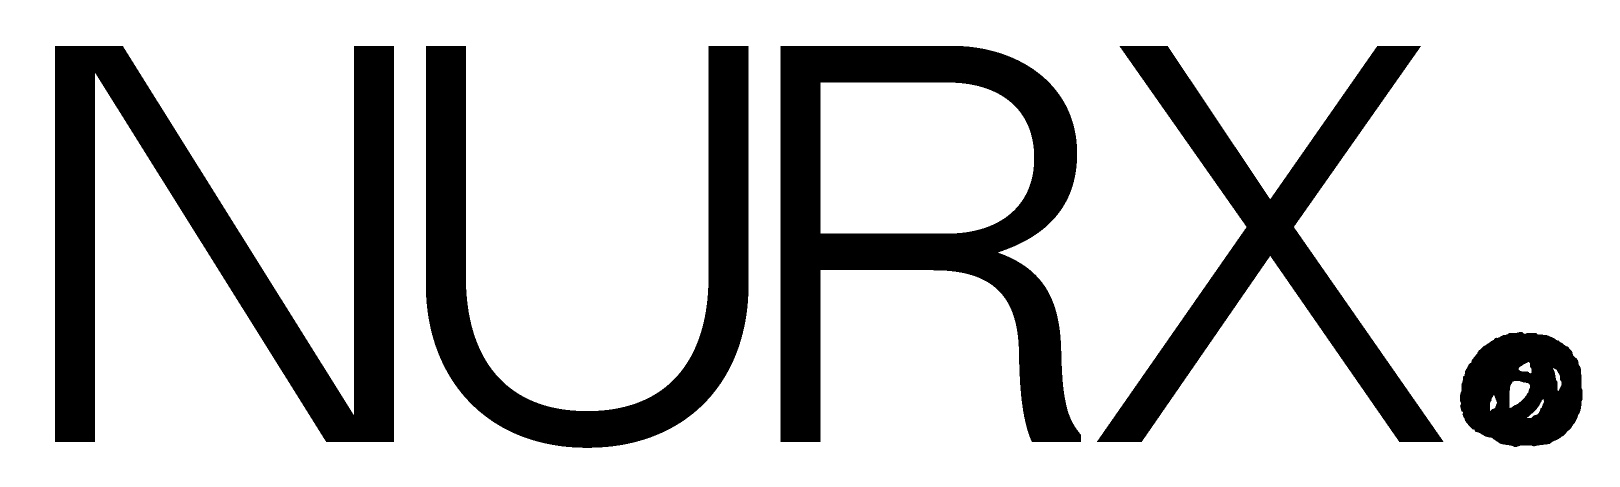 nurx_logo.jpg